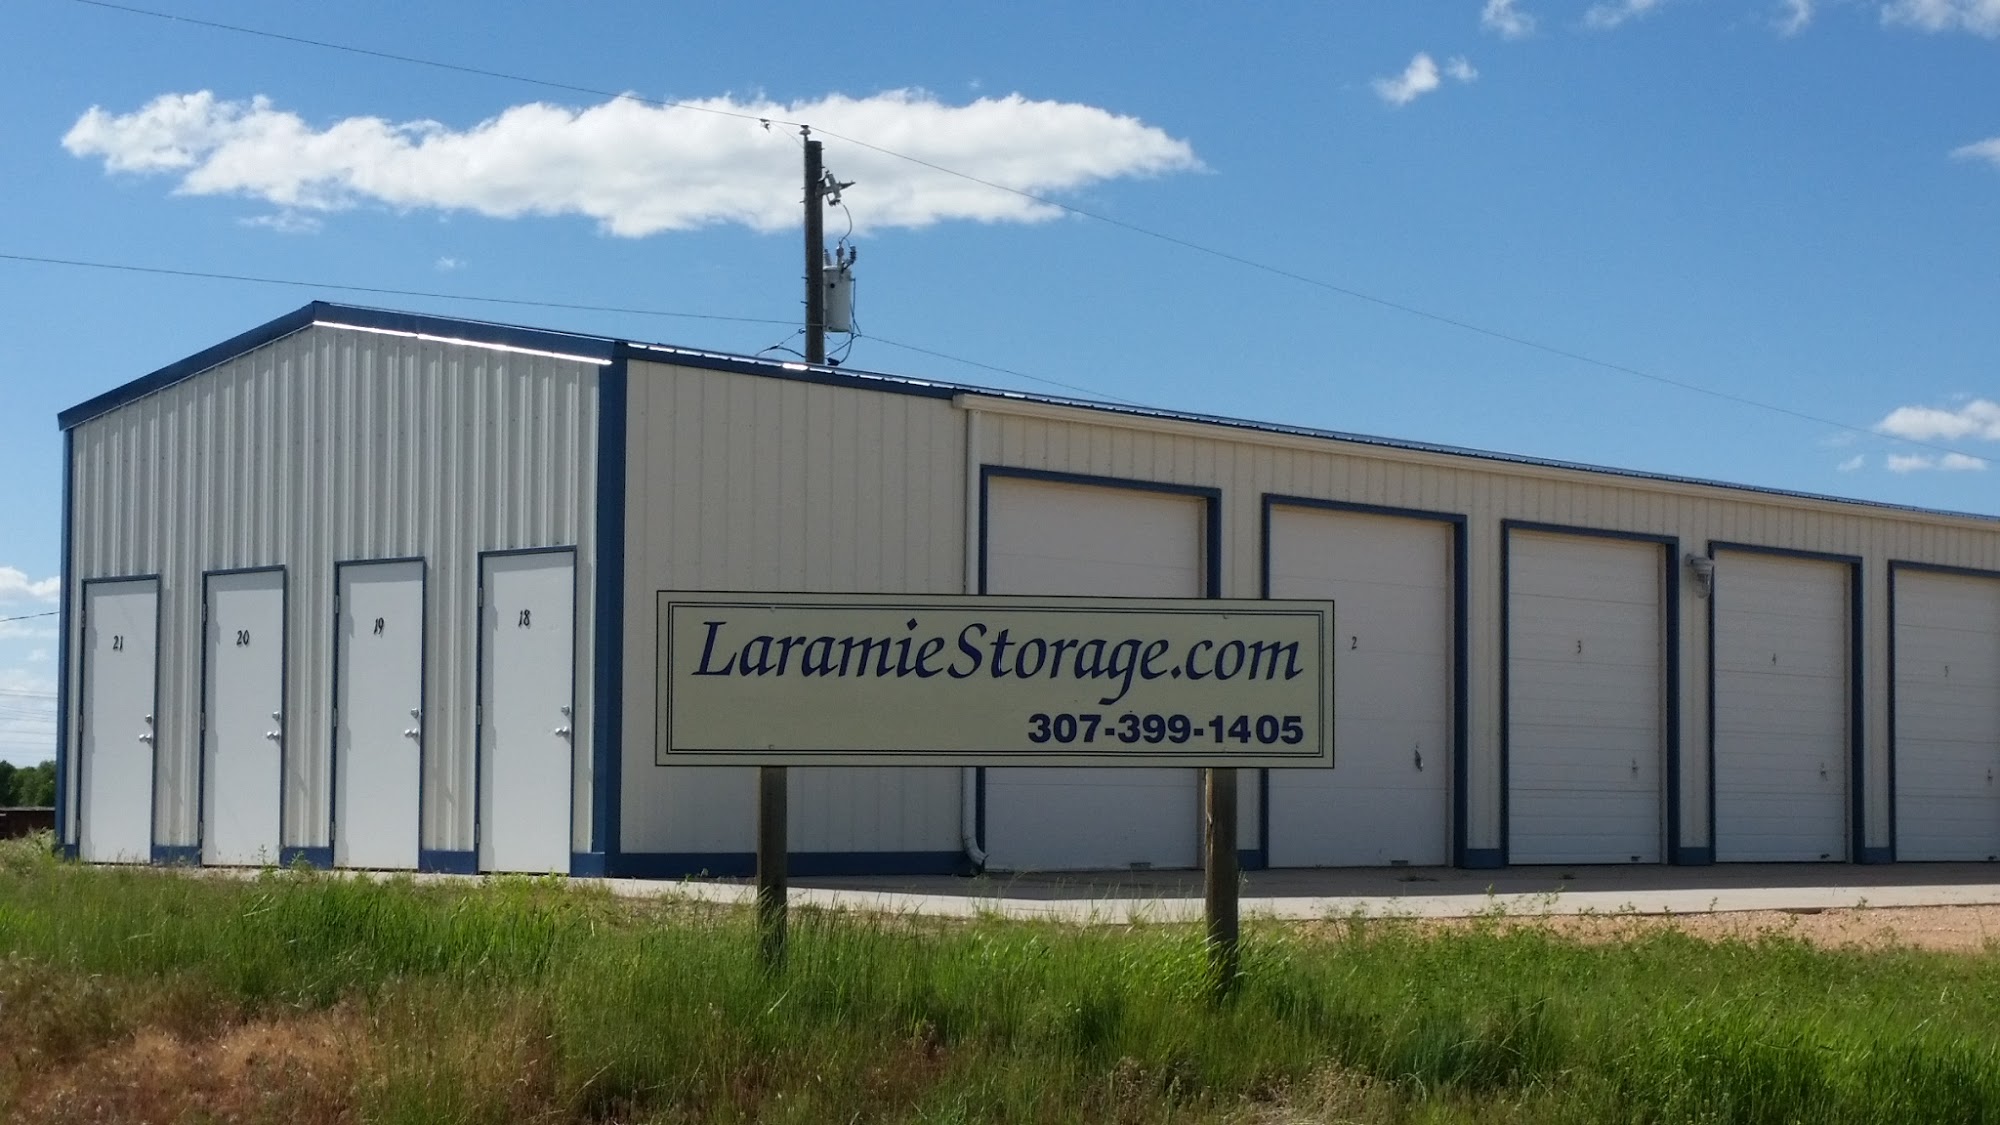 Laramie Storage